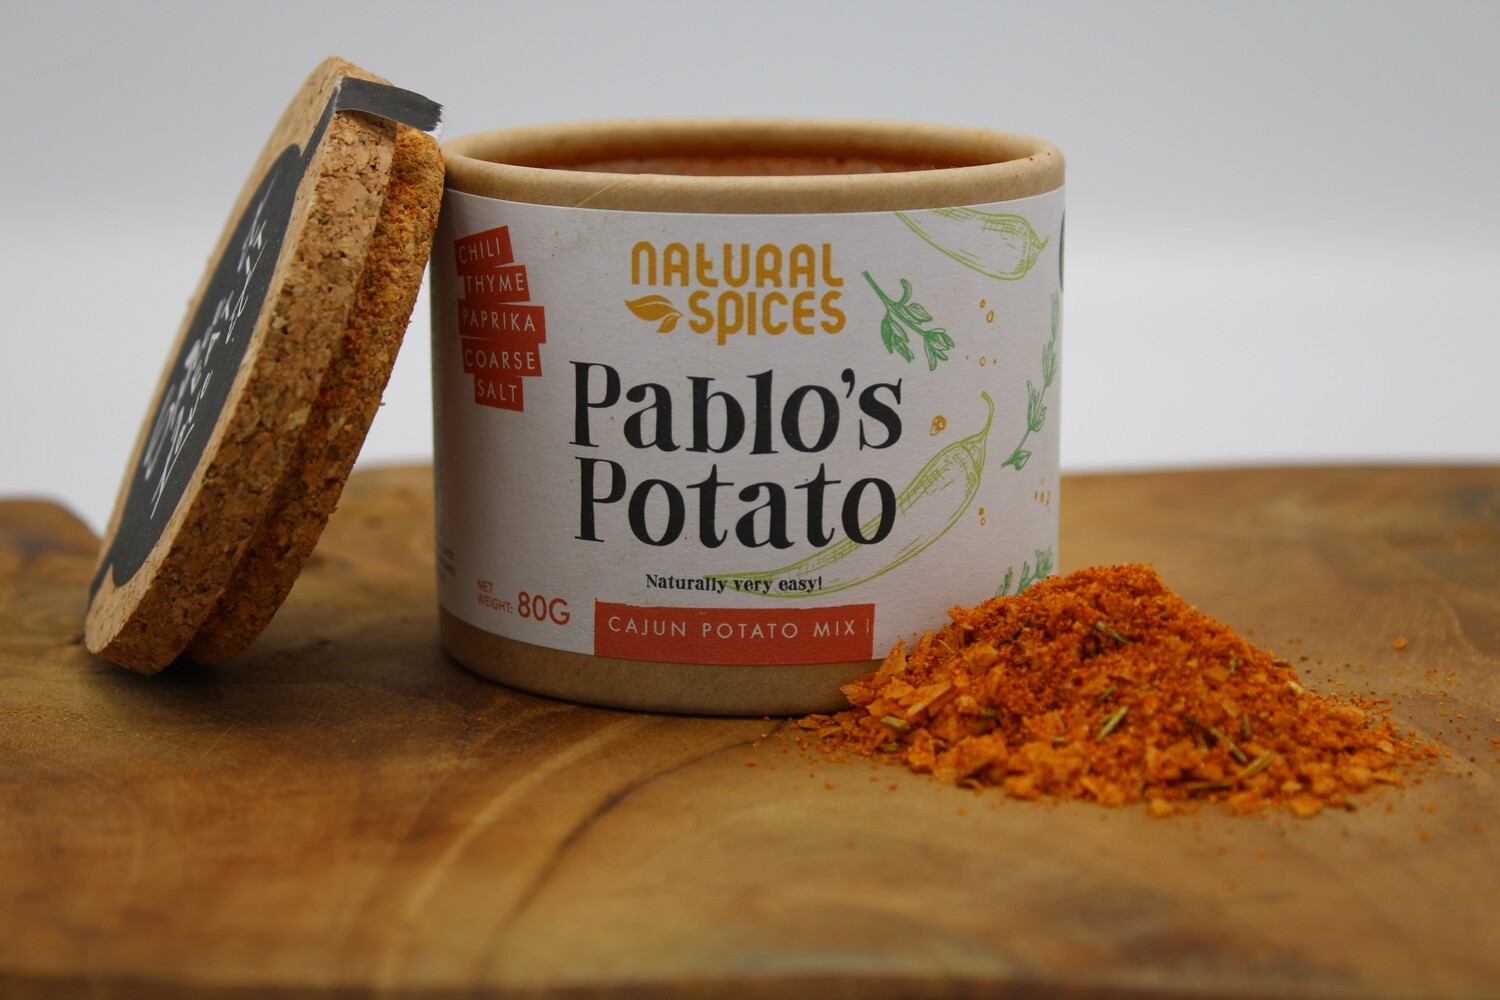 Pablo's potato